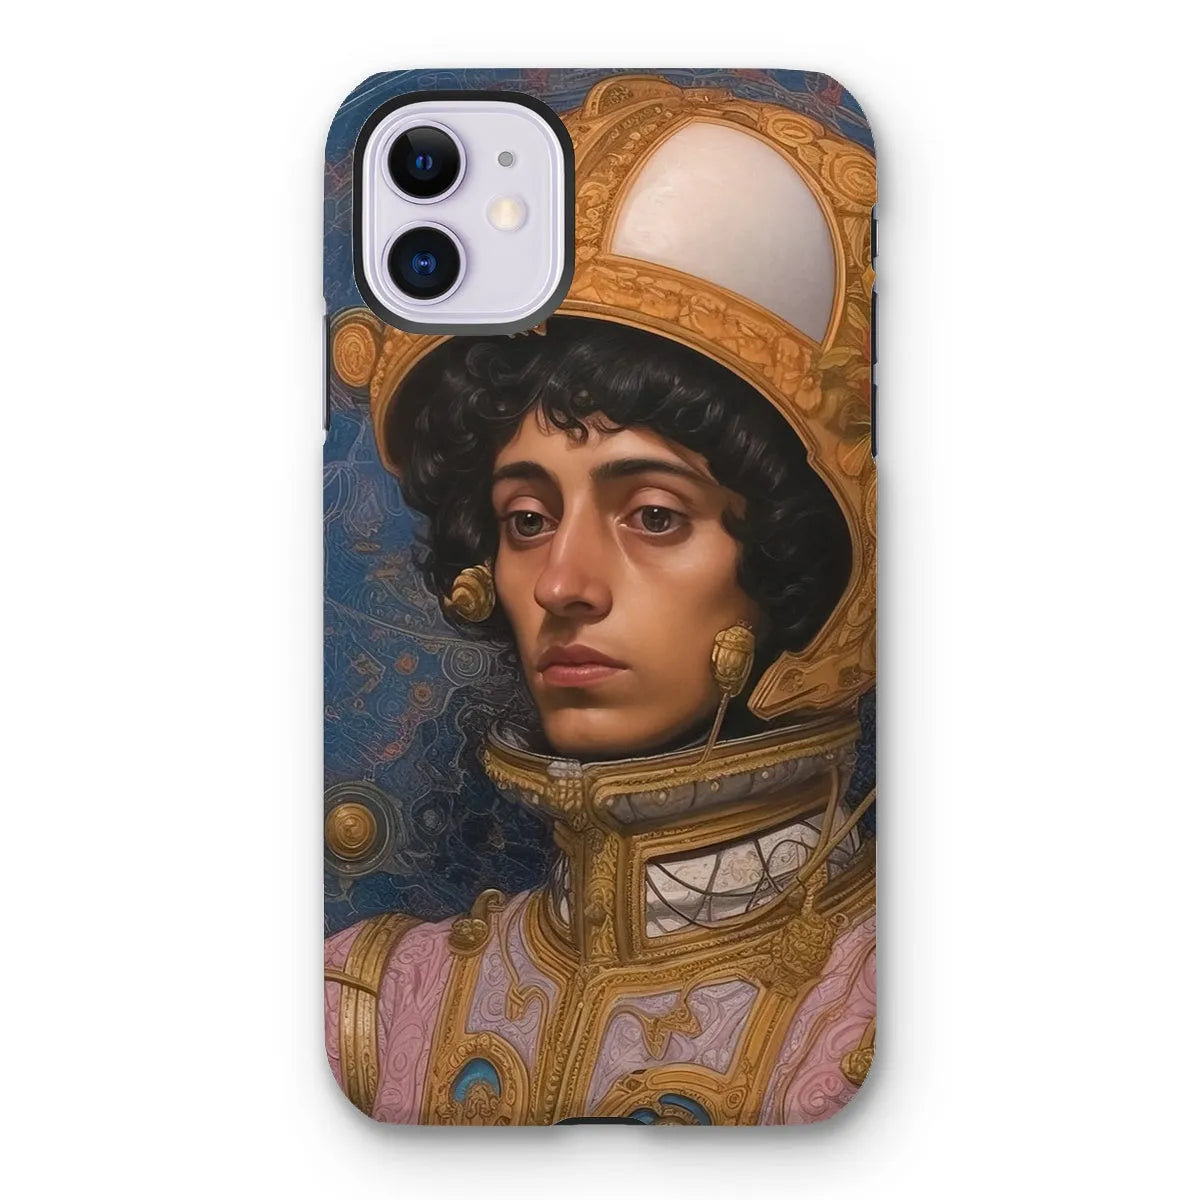 Samir The Gay Astronaut - Lgbtq Art Phone Case - Iphone 11 / Matte - Mobile Phone Cases - Aesthetic Art